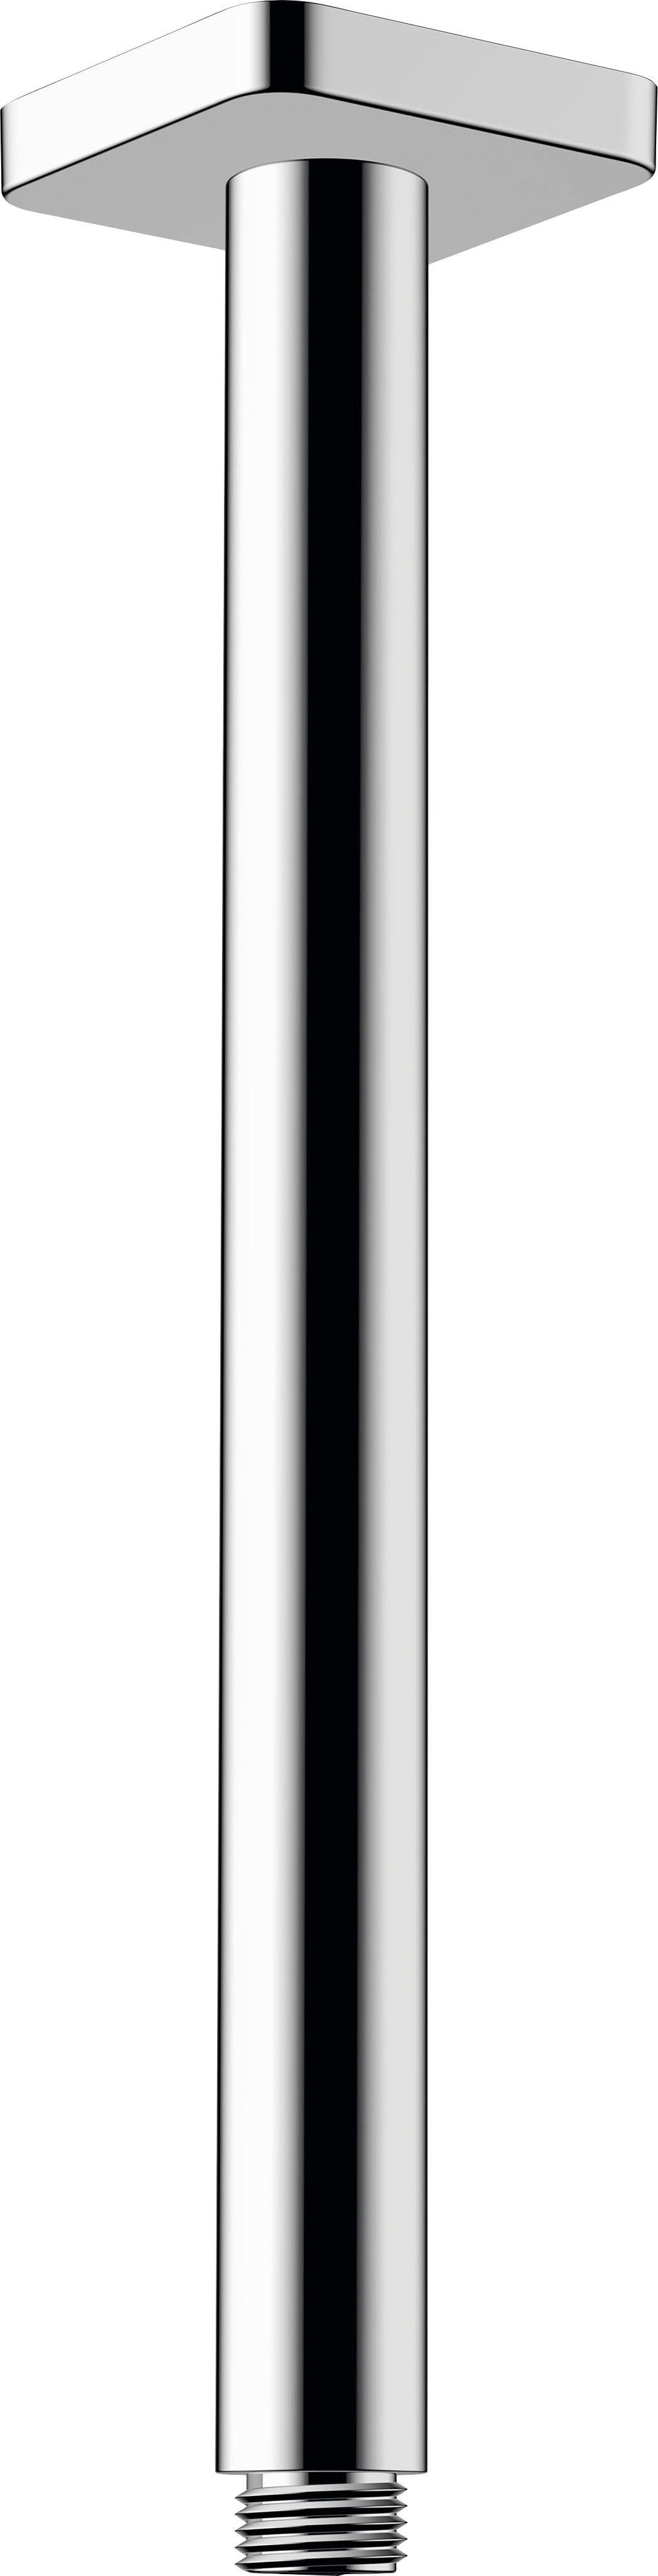 hansgrohe Deckenanschlussrohr Vernis Shape, 30 cm